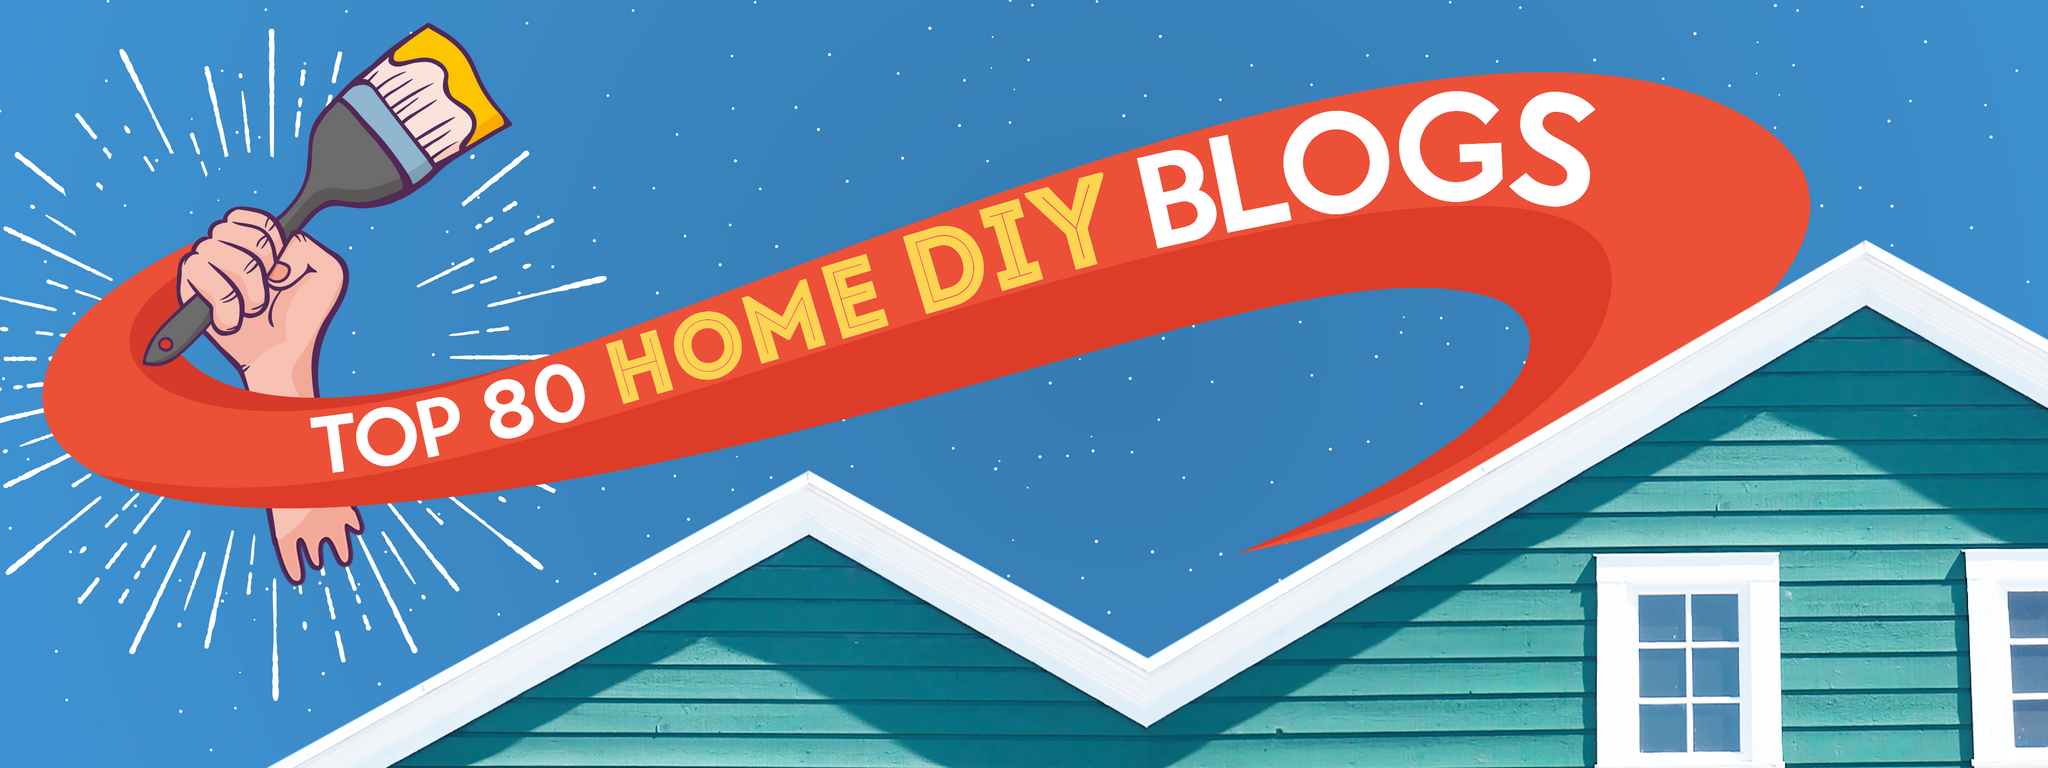 Best Home Depot Hacks, Homesteading Tips & Tricks!